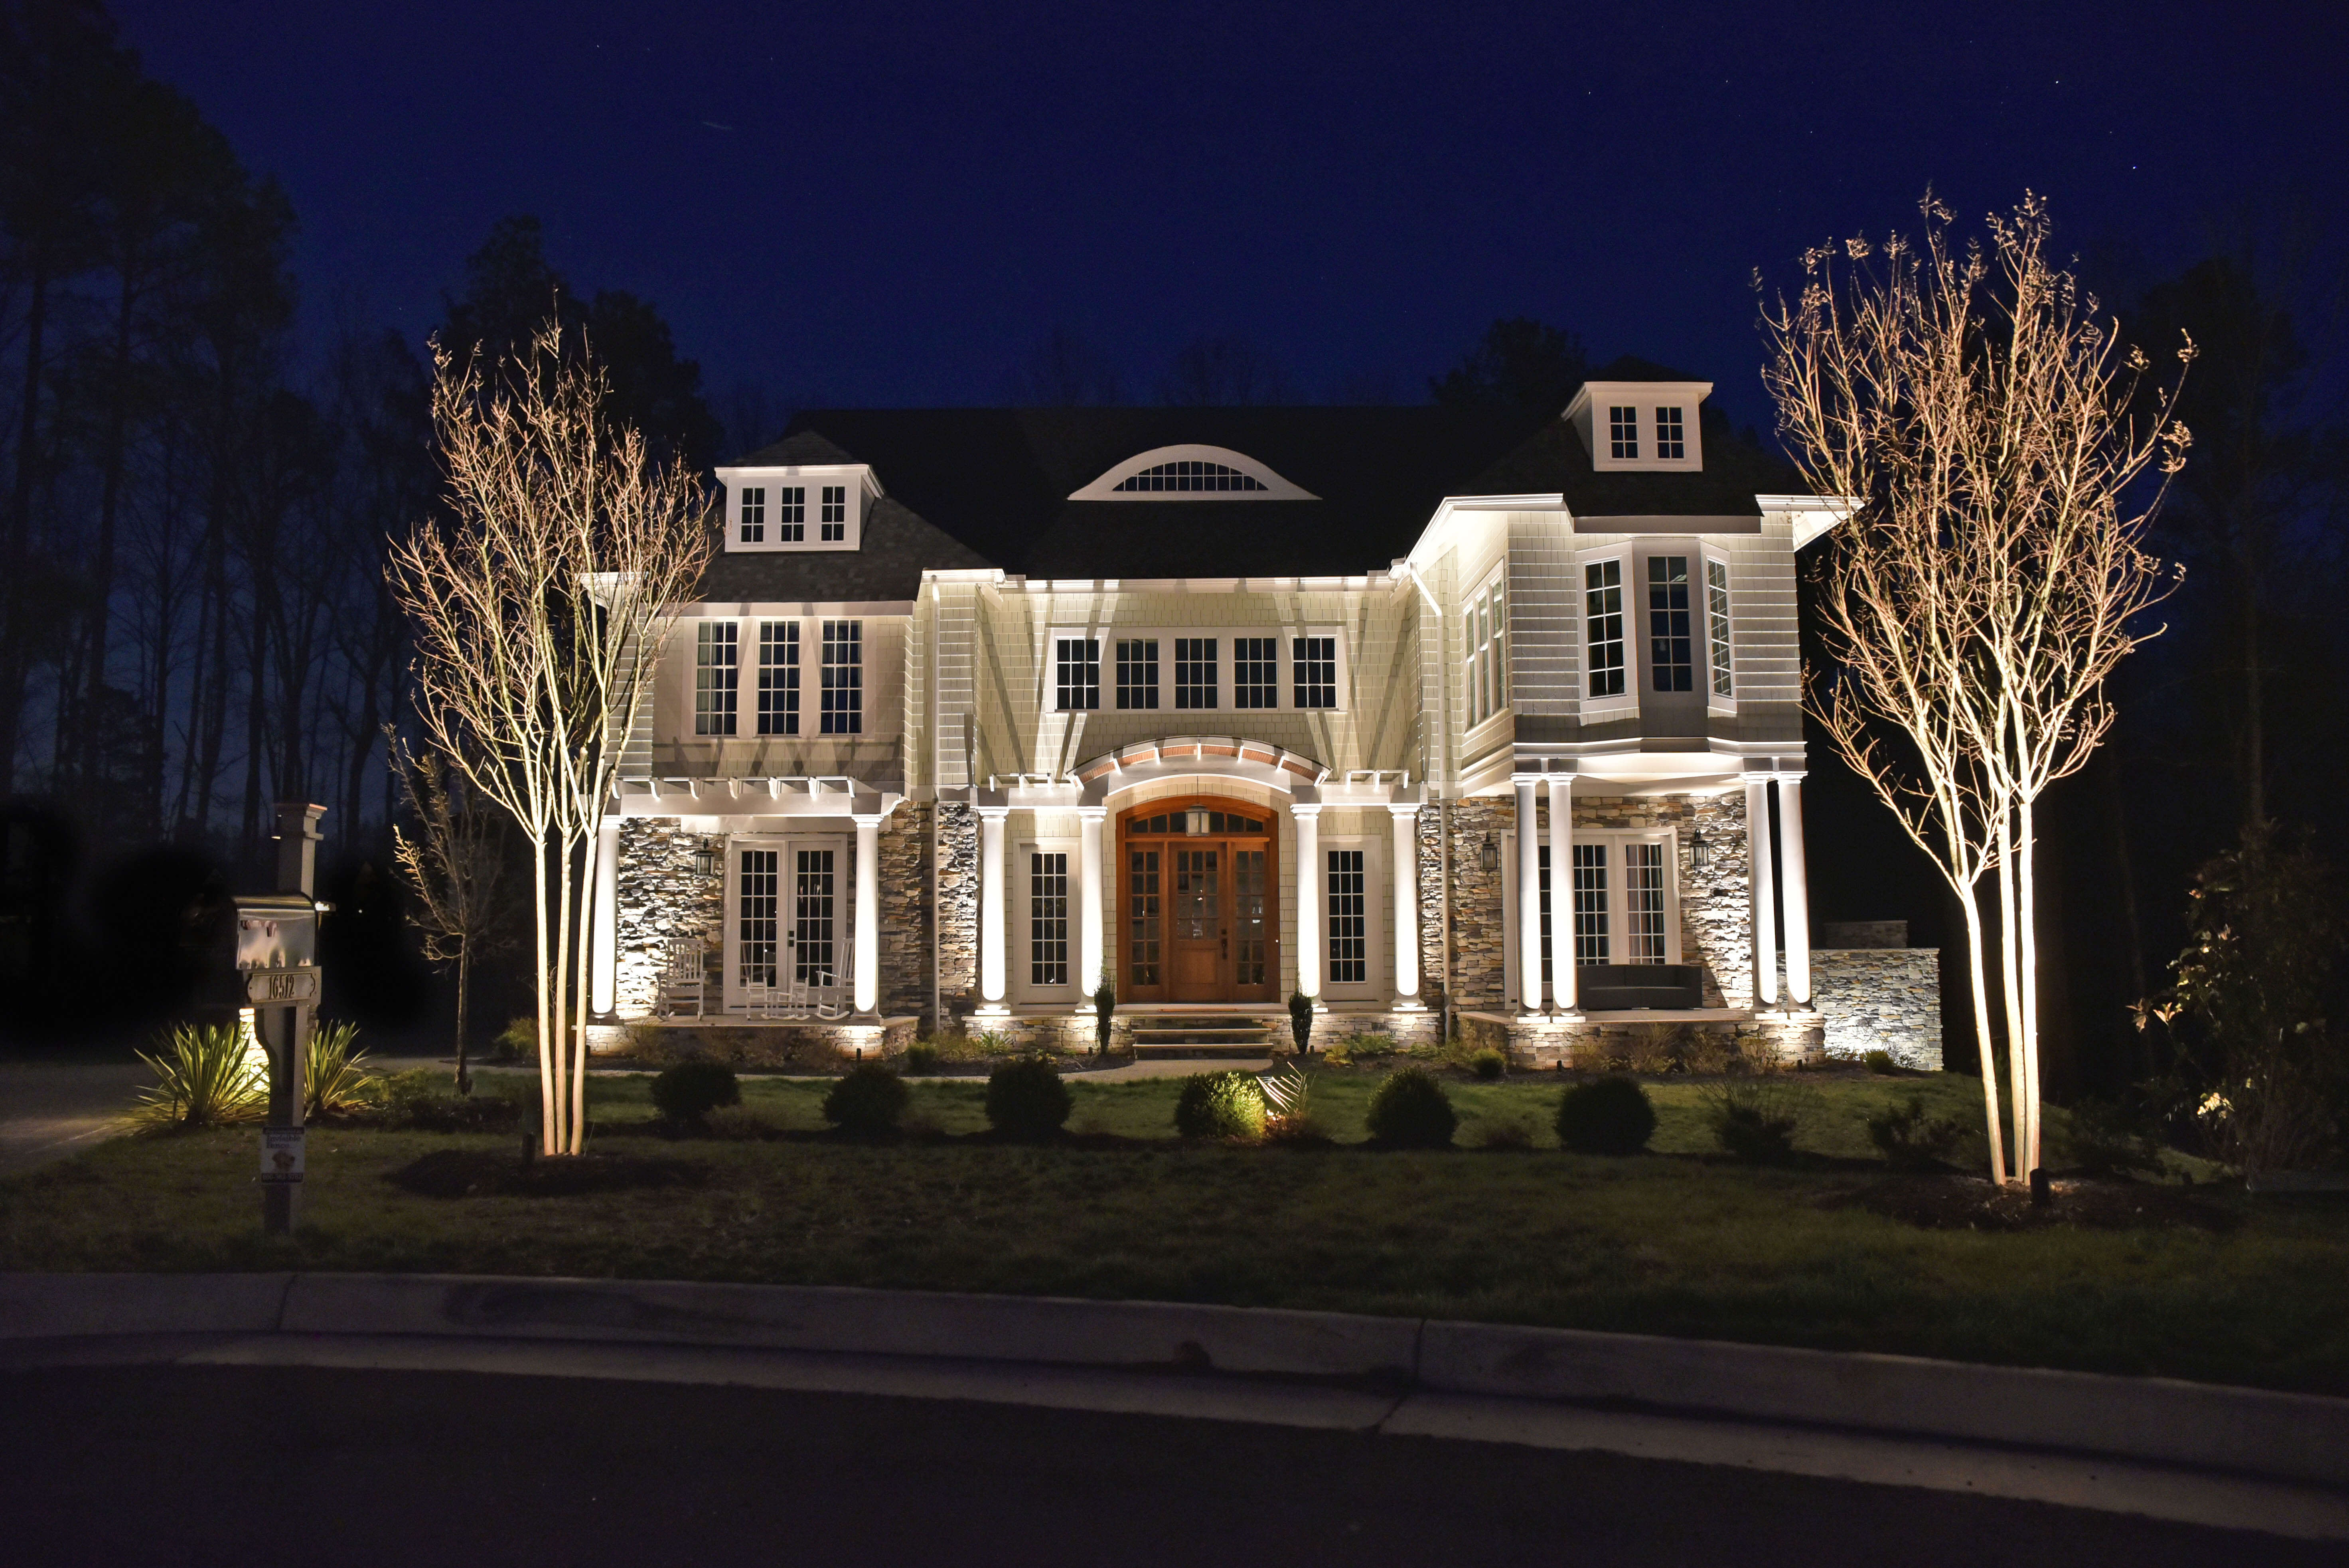 House illuminated by Outdoor Lighting